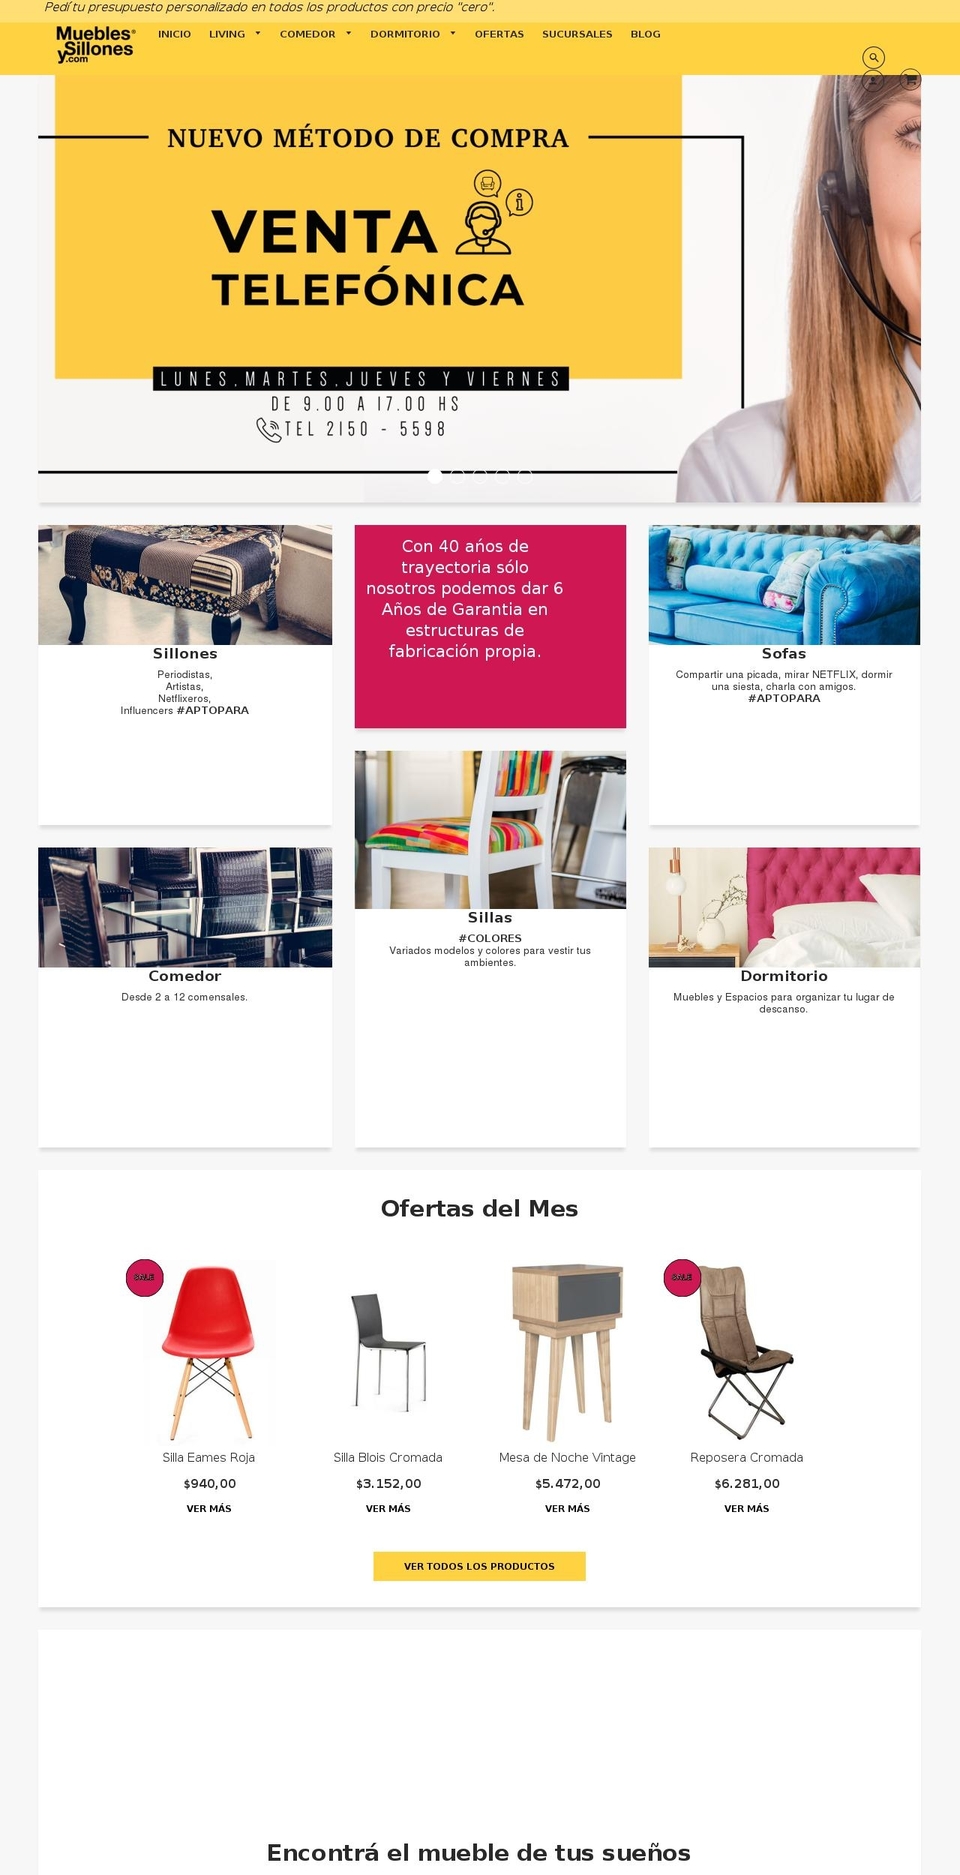 mueblesysillones.com shopify website screenshot